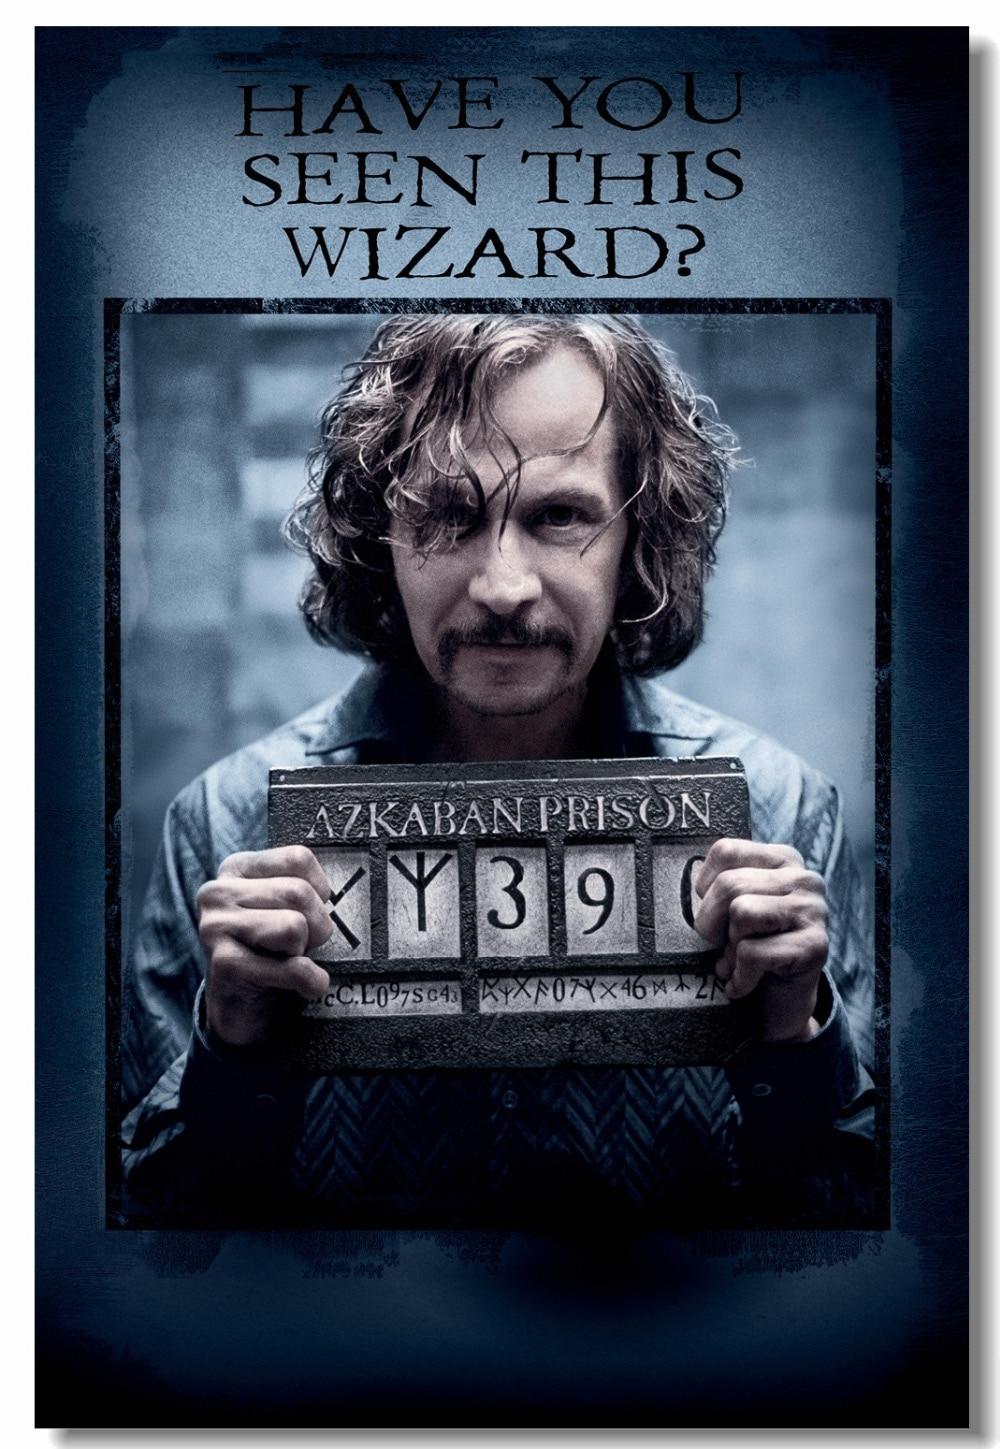 US $5.43 32% OFF. Aliexpress.com, Buy Custom Canvas Wall Decal Harry Potter Sirius Black Poster Wizard David Thewlis Stickers The Prisoner Of Azkaban